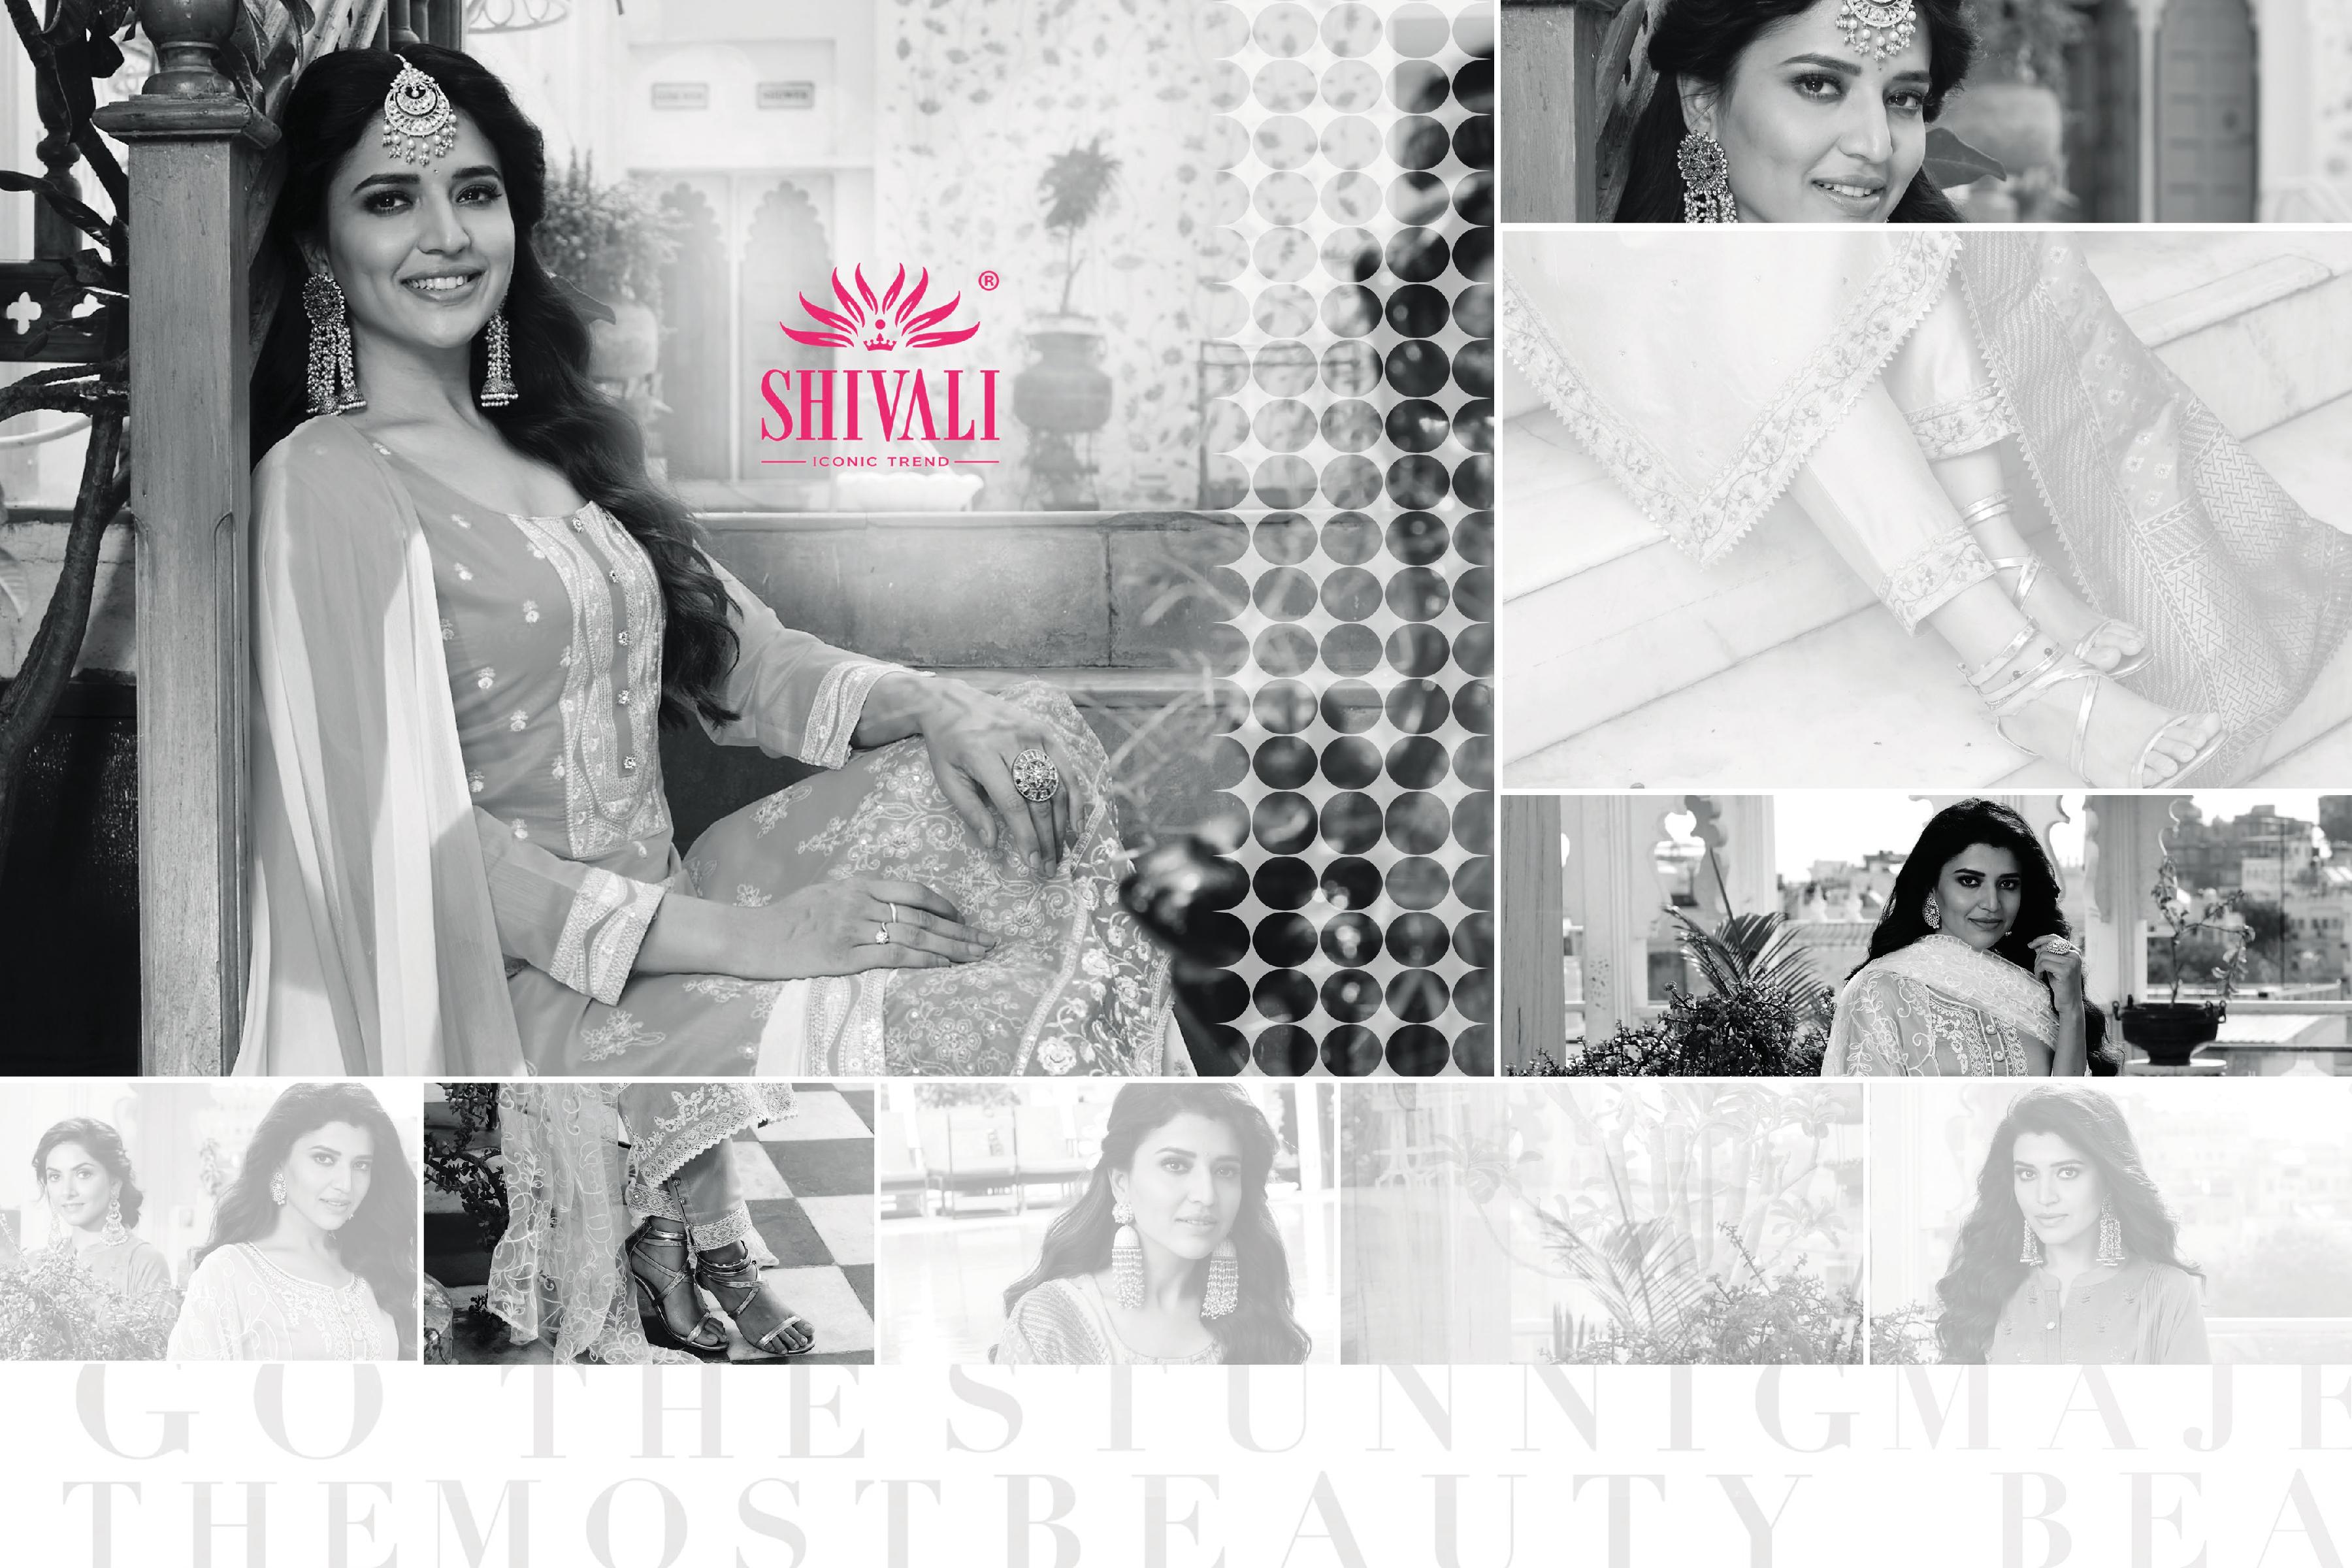 shivali fashion kiara Vol 4 fancy gorgeous look kurti catalog